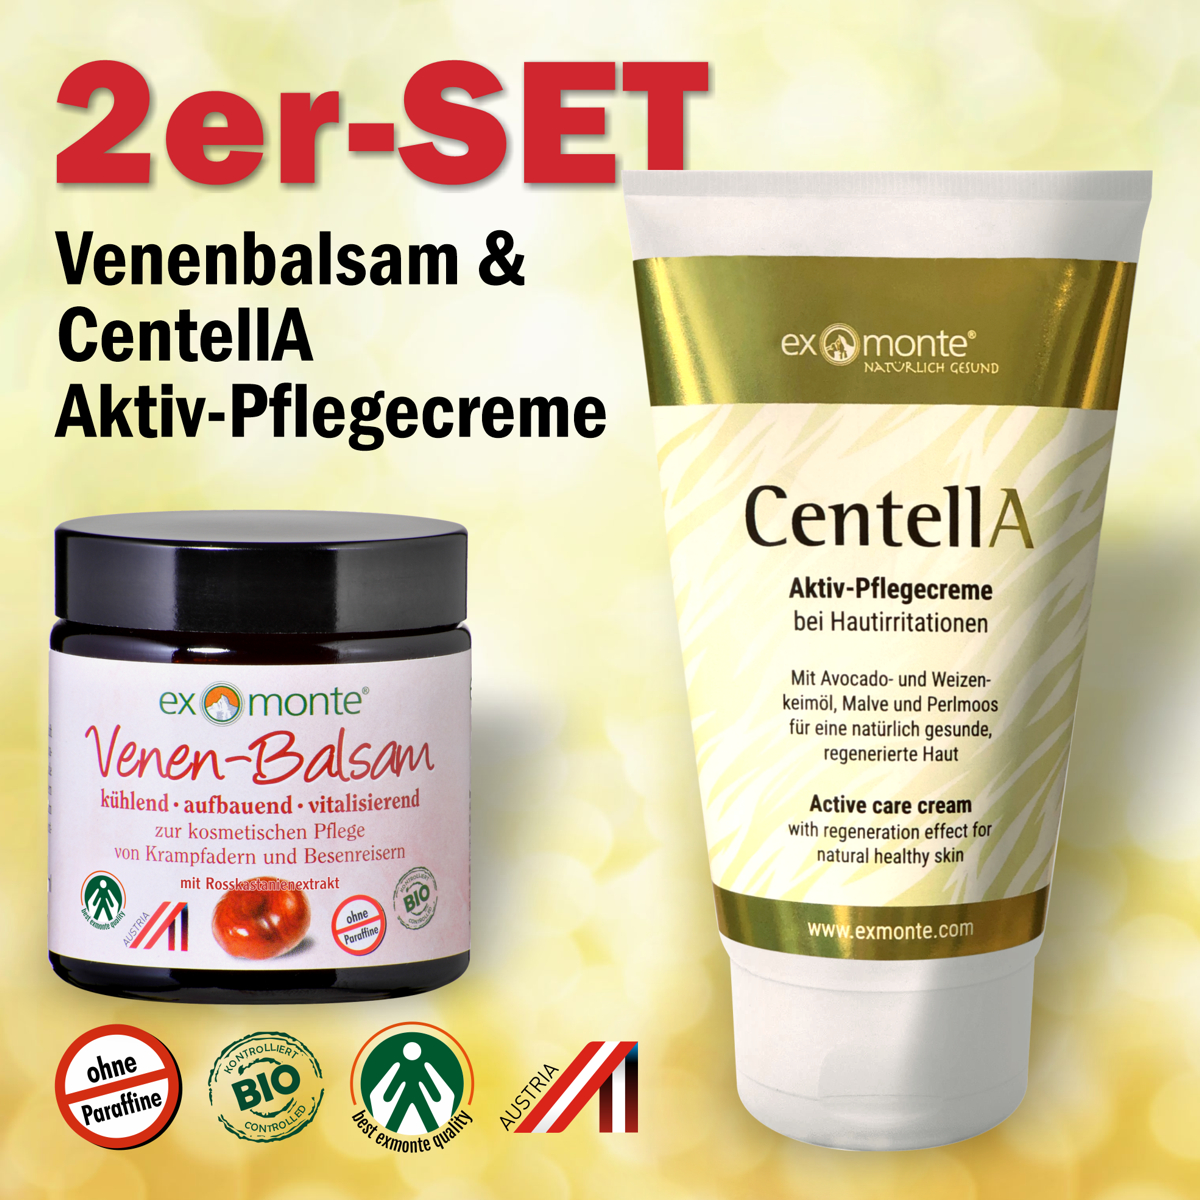 2 Piece Set Veins-Balm and CentellA Active care